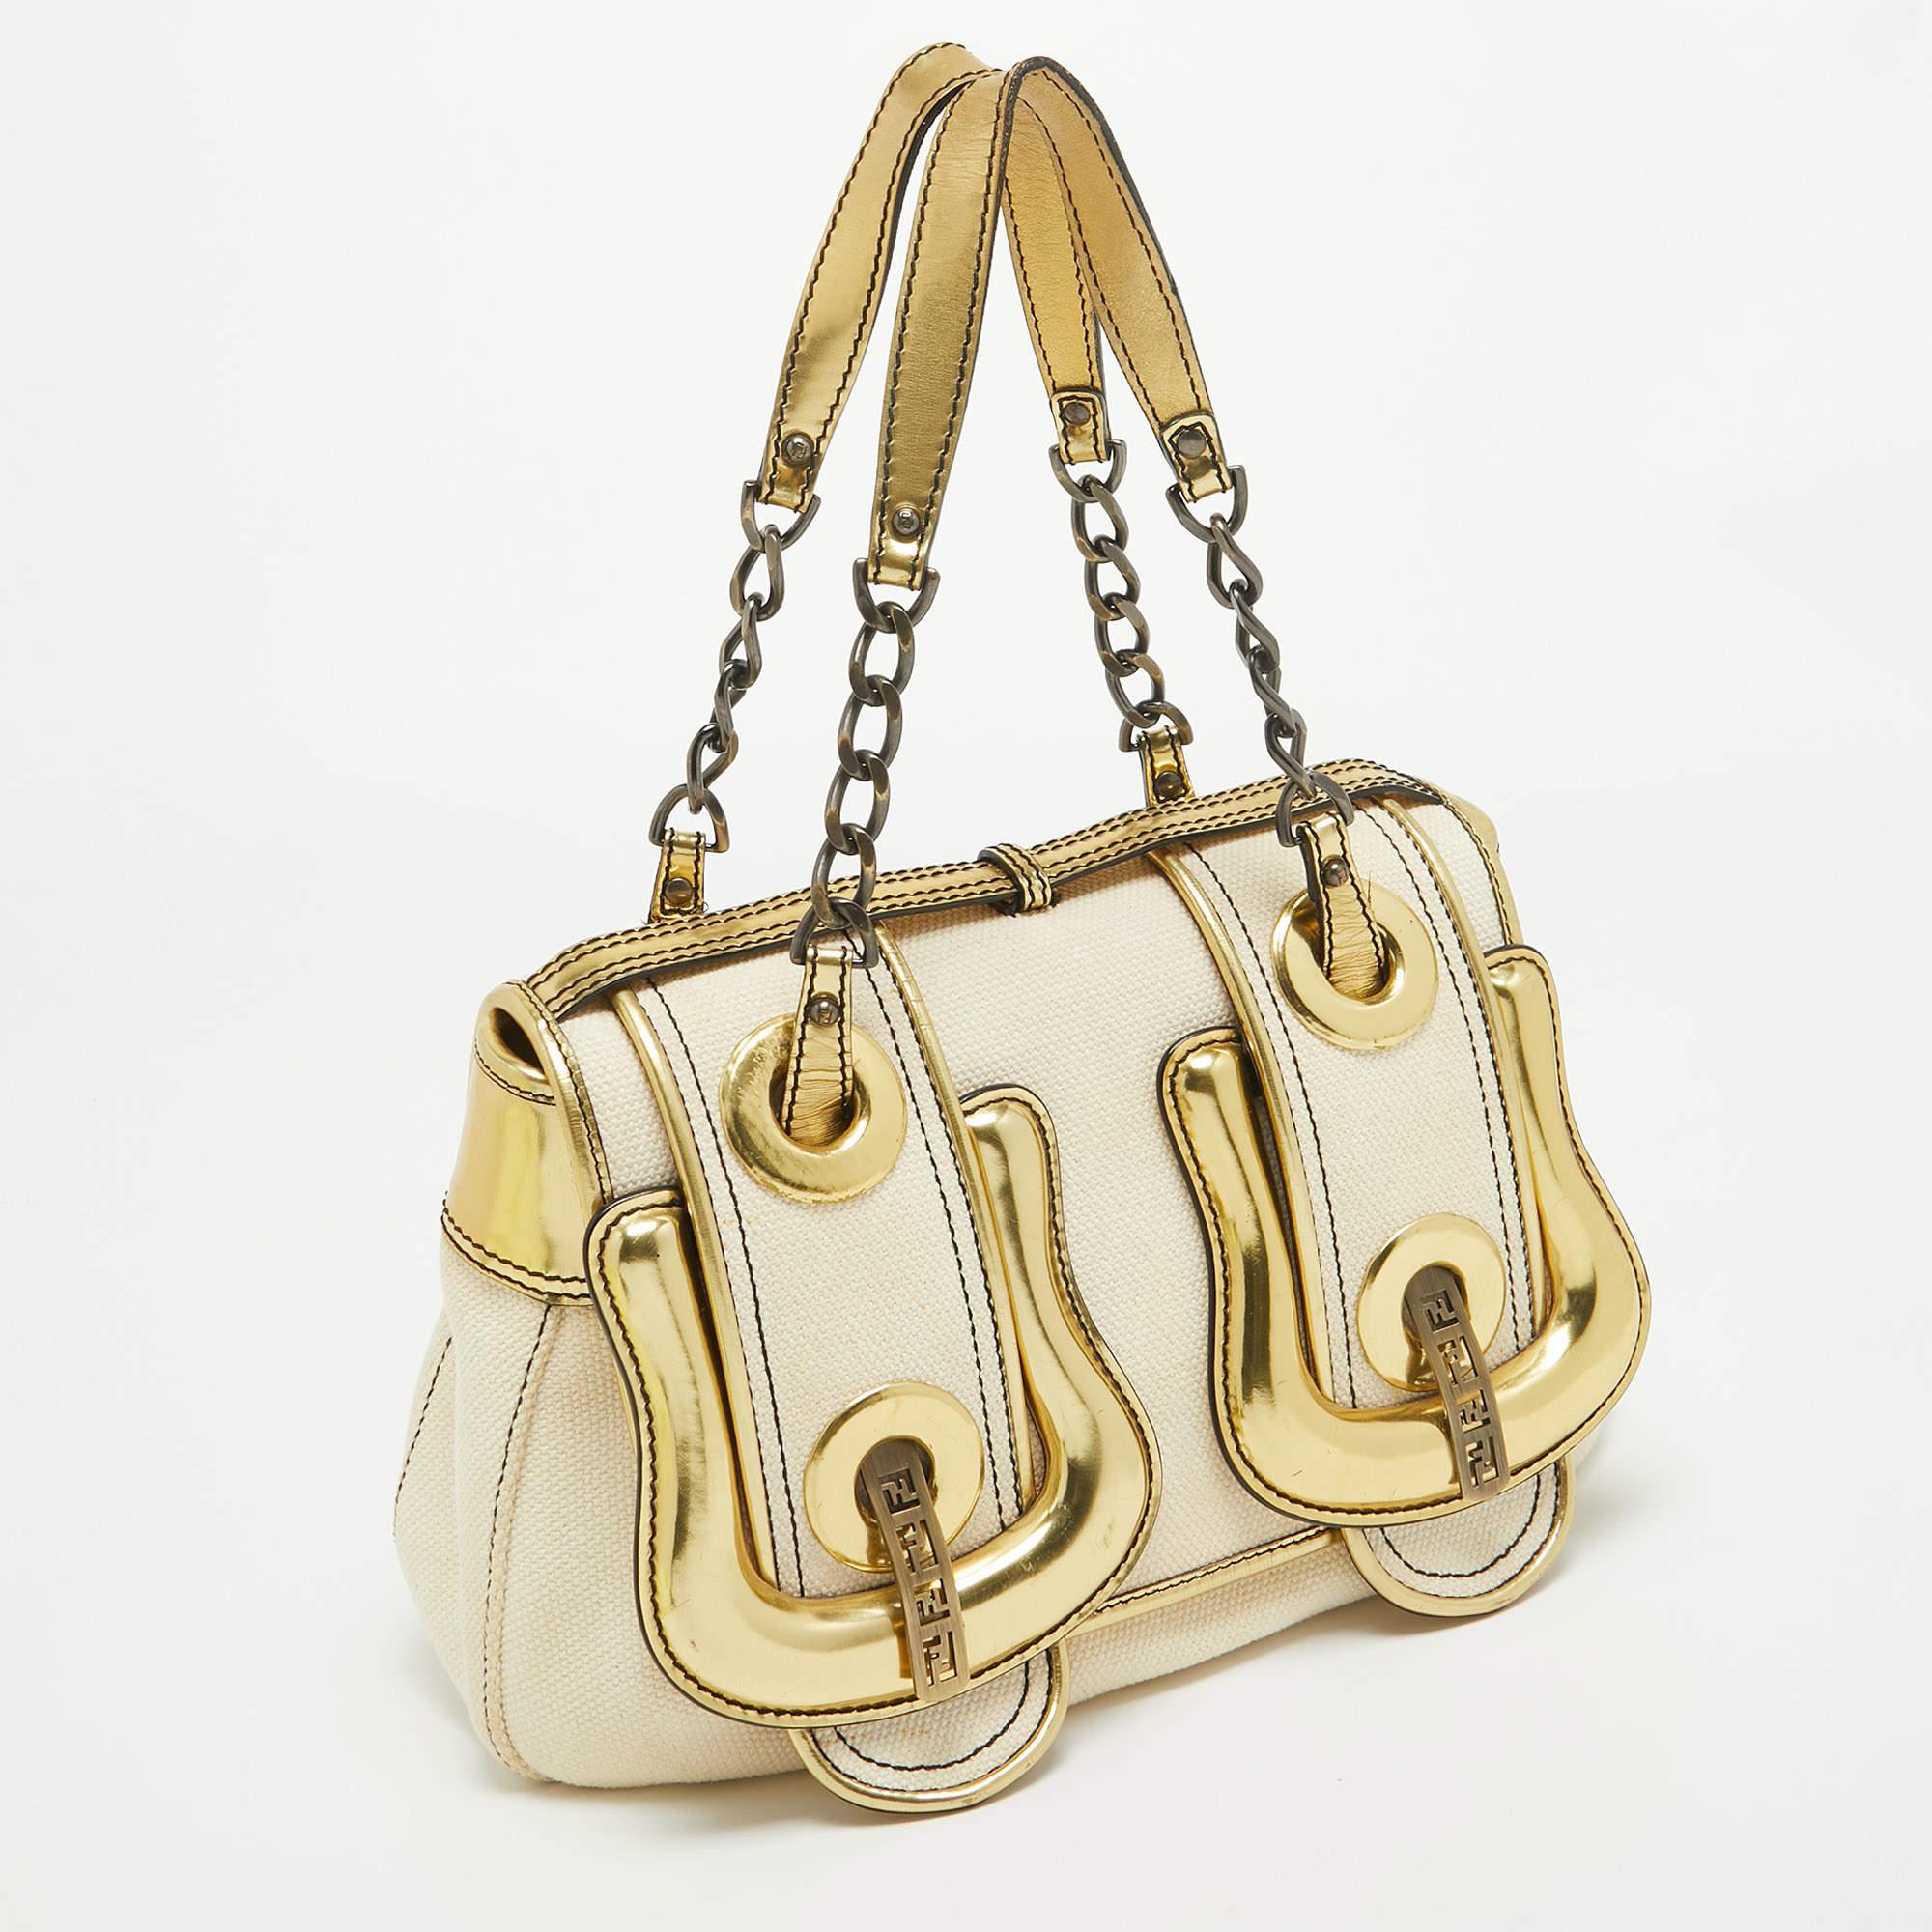 Fendi Gold/Beige Canvas and Patent Leather B Shoulder Bag In Good Condition For Sale In Dubai, Al Qouz 2